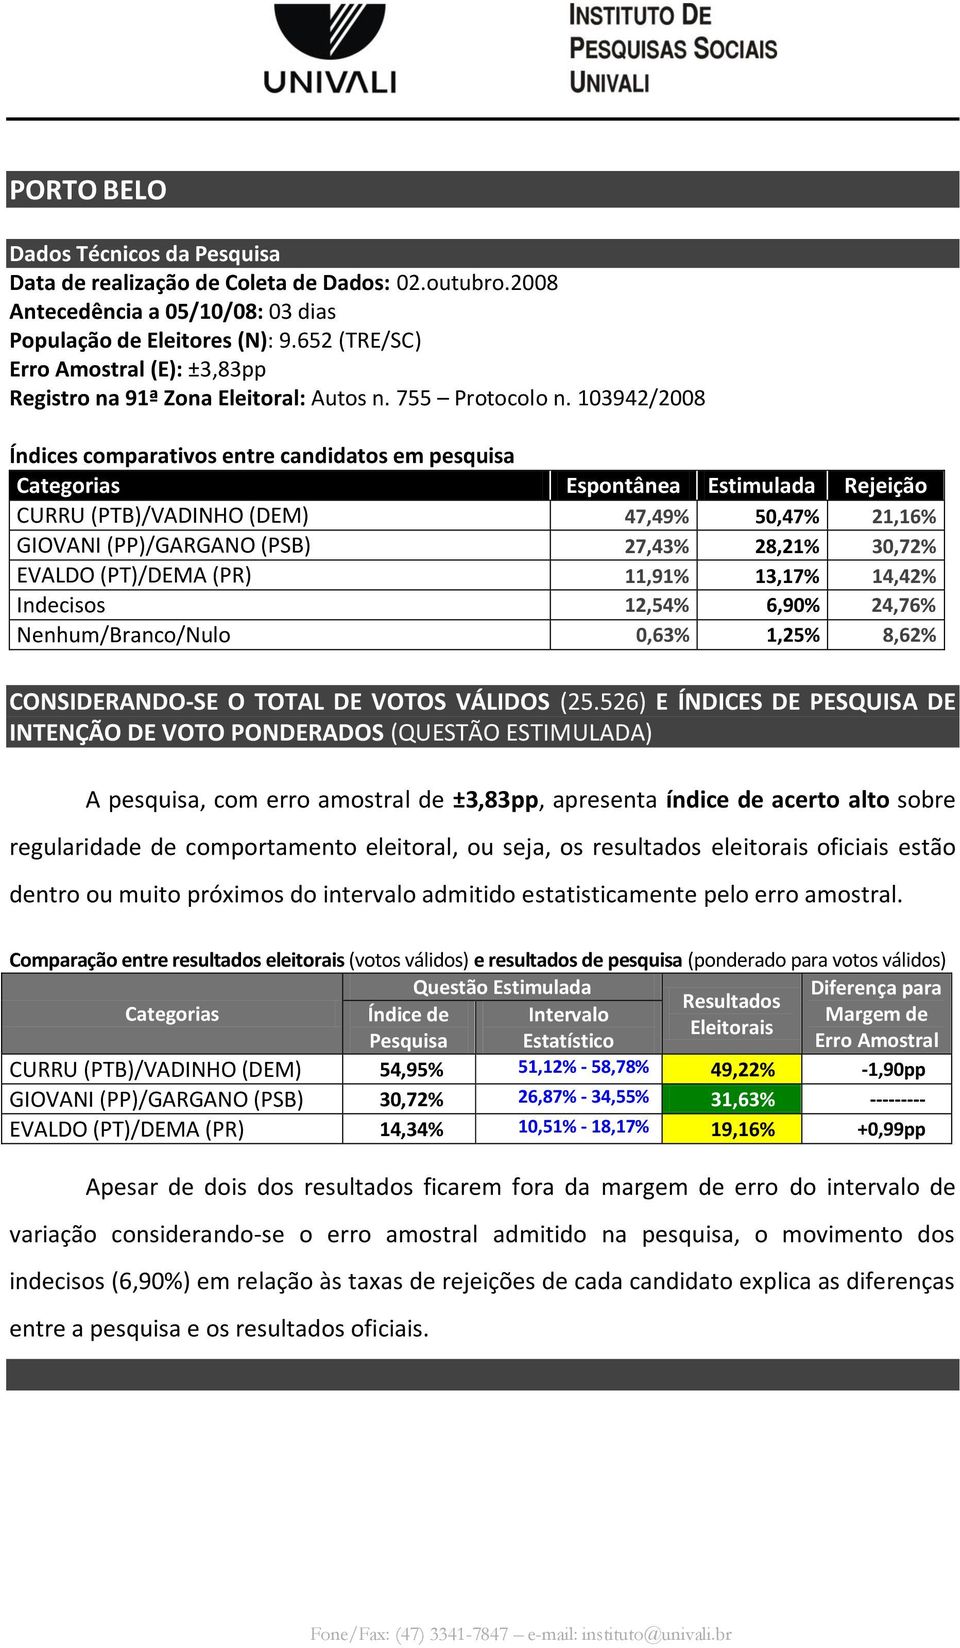 103942/2008 CURRU (PTB)/VADINHO (DEM) 47,49% 50,47% 21,16% GIOVANI (PP)/GARGANO (PSB) 27,43% 28,21% 30,72% EVALDO (PT)/DEMA (PR) 11,91% 13,17% 14,42% Indecisos 12,54% 6,90% 24,76% Nenhum/Branco/Nulo